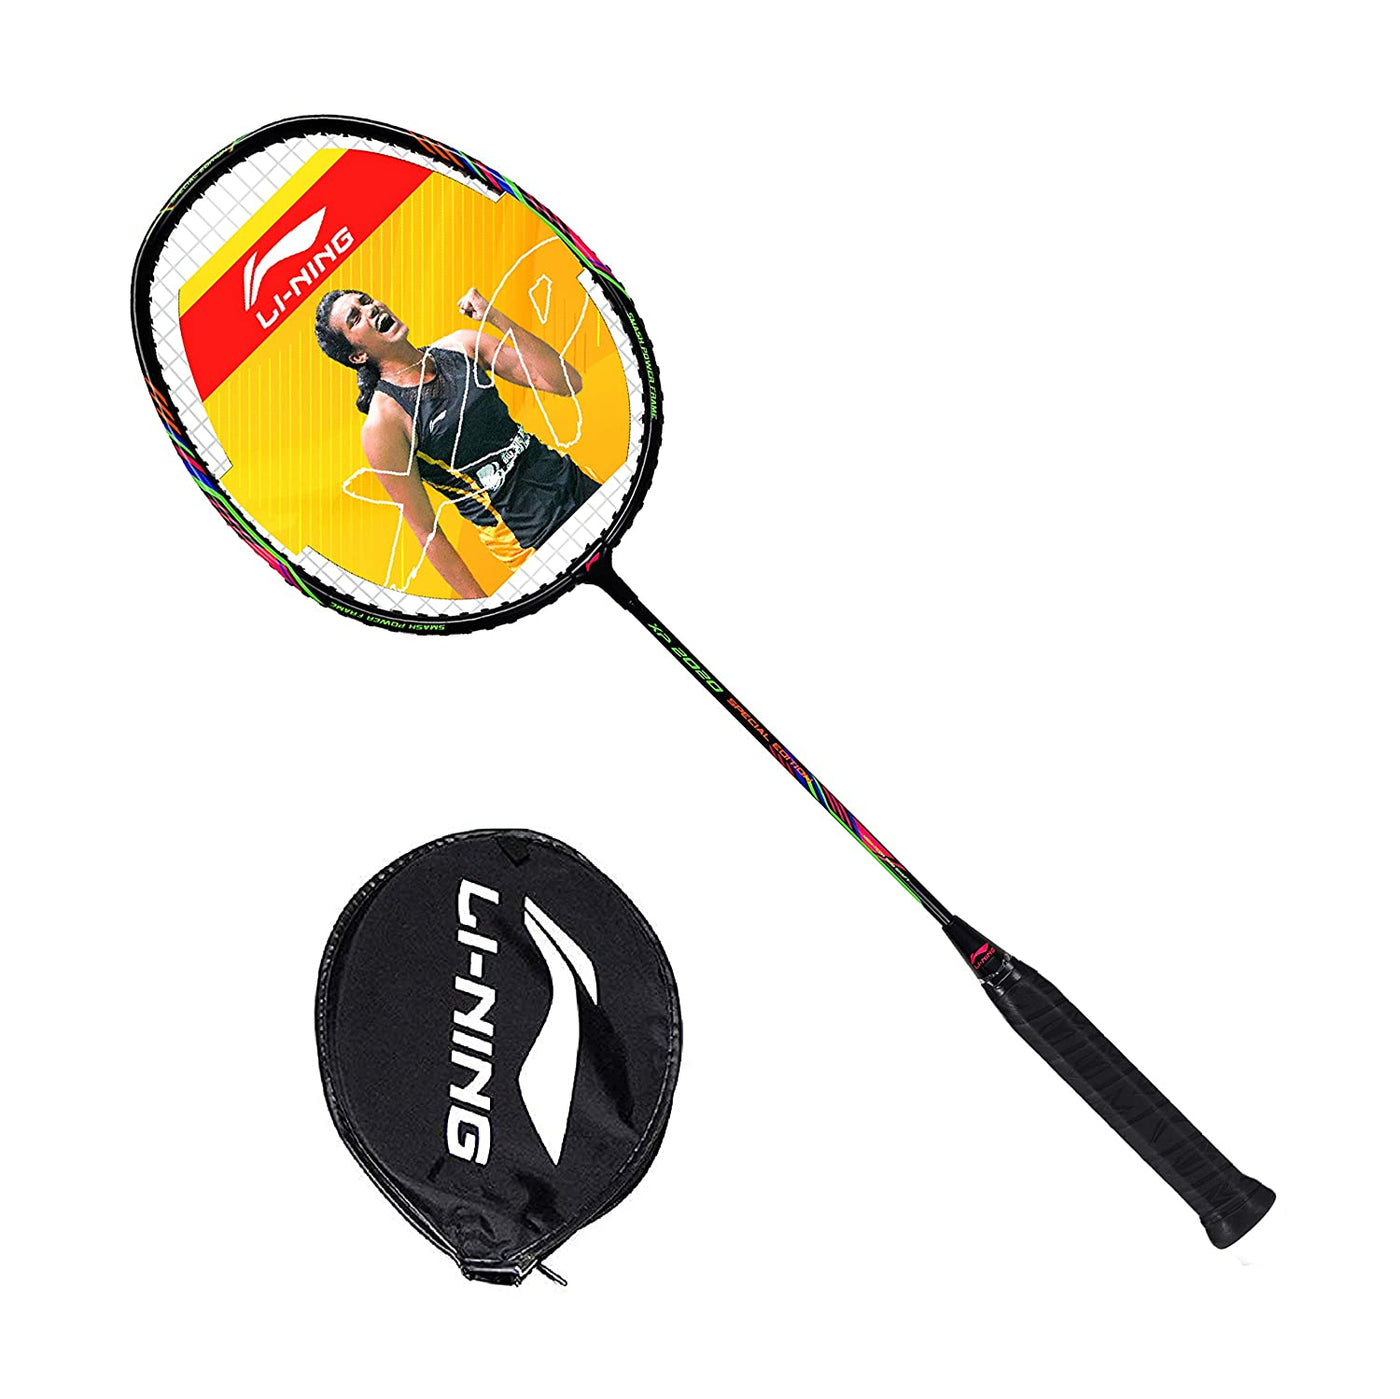 Lining Badminton athletive XP